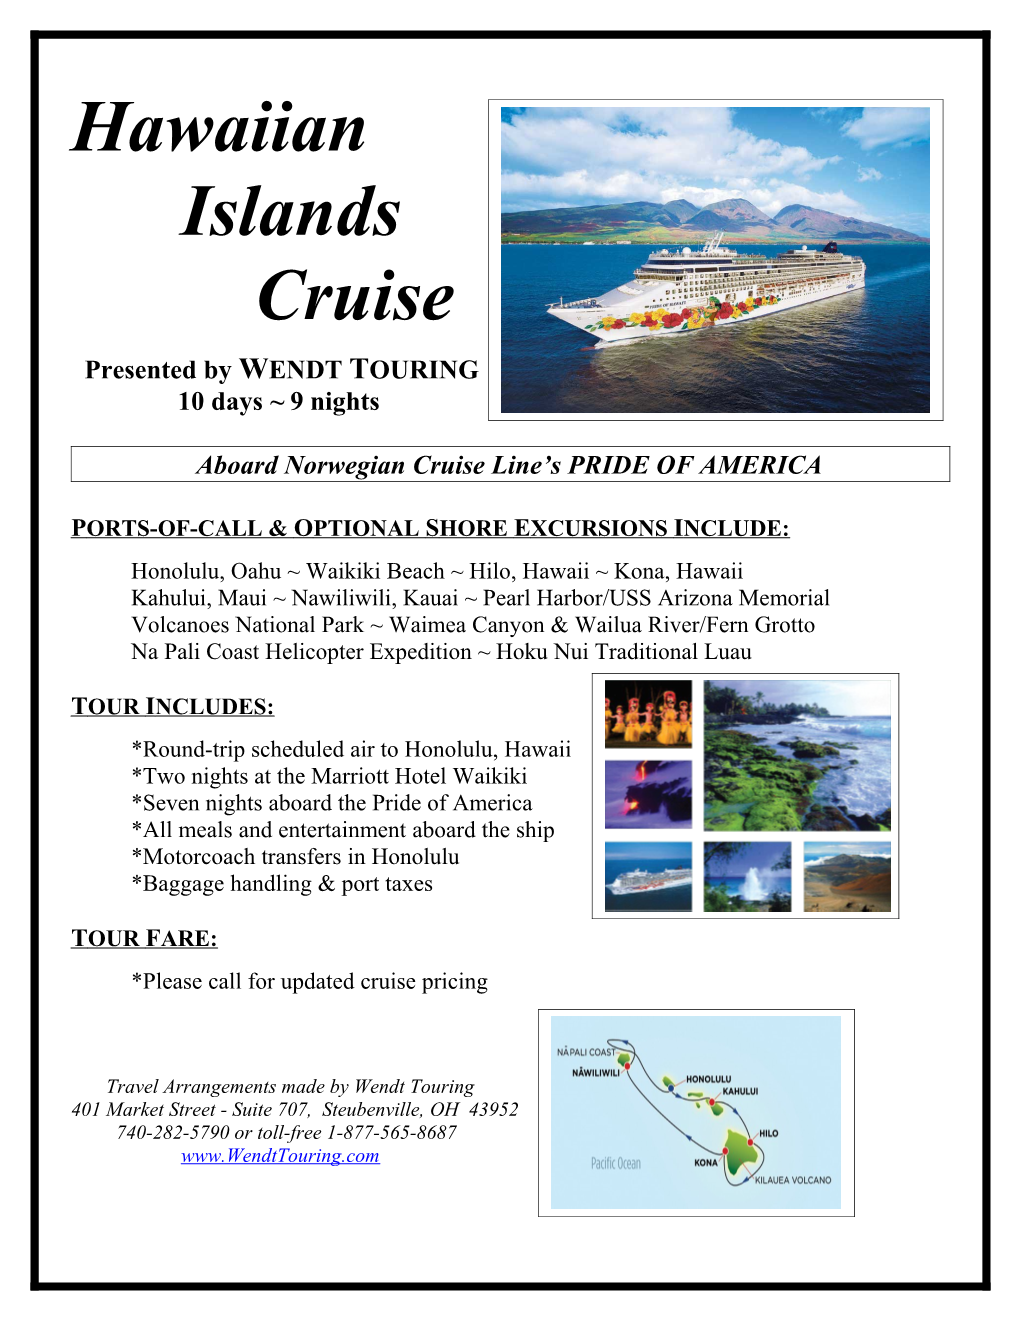 Aboard Norwegian Cruise Line Spride of AMERICA